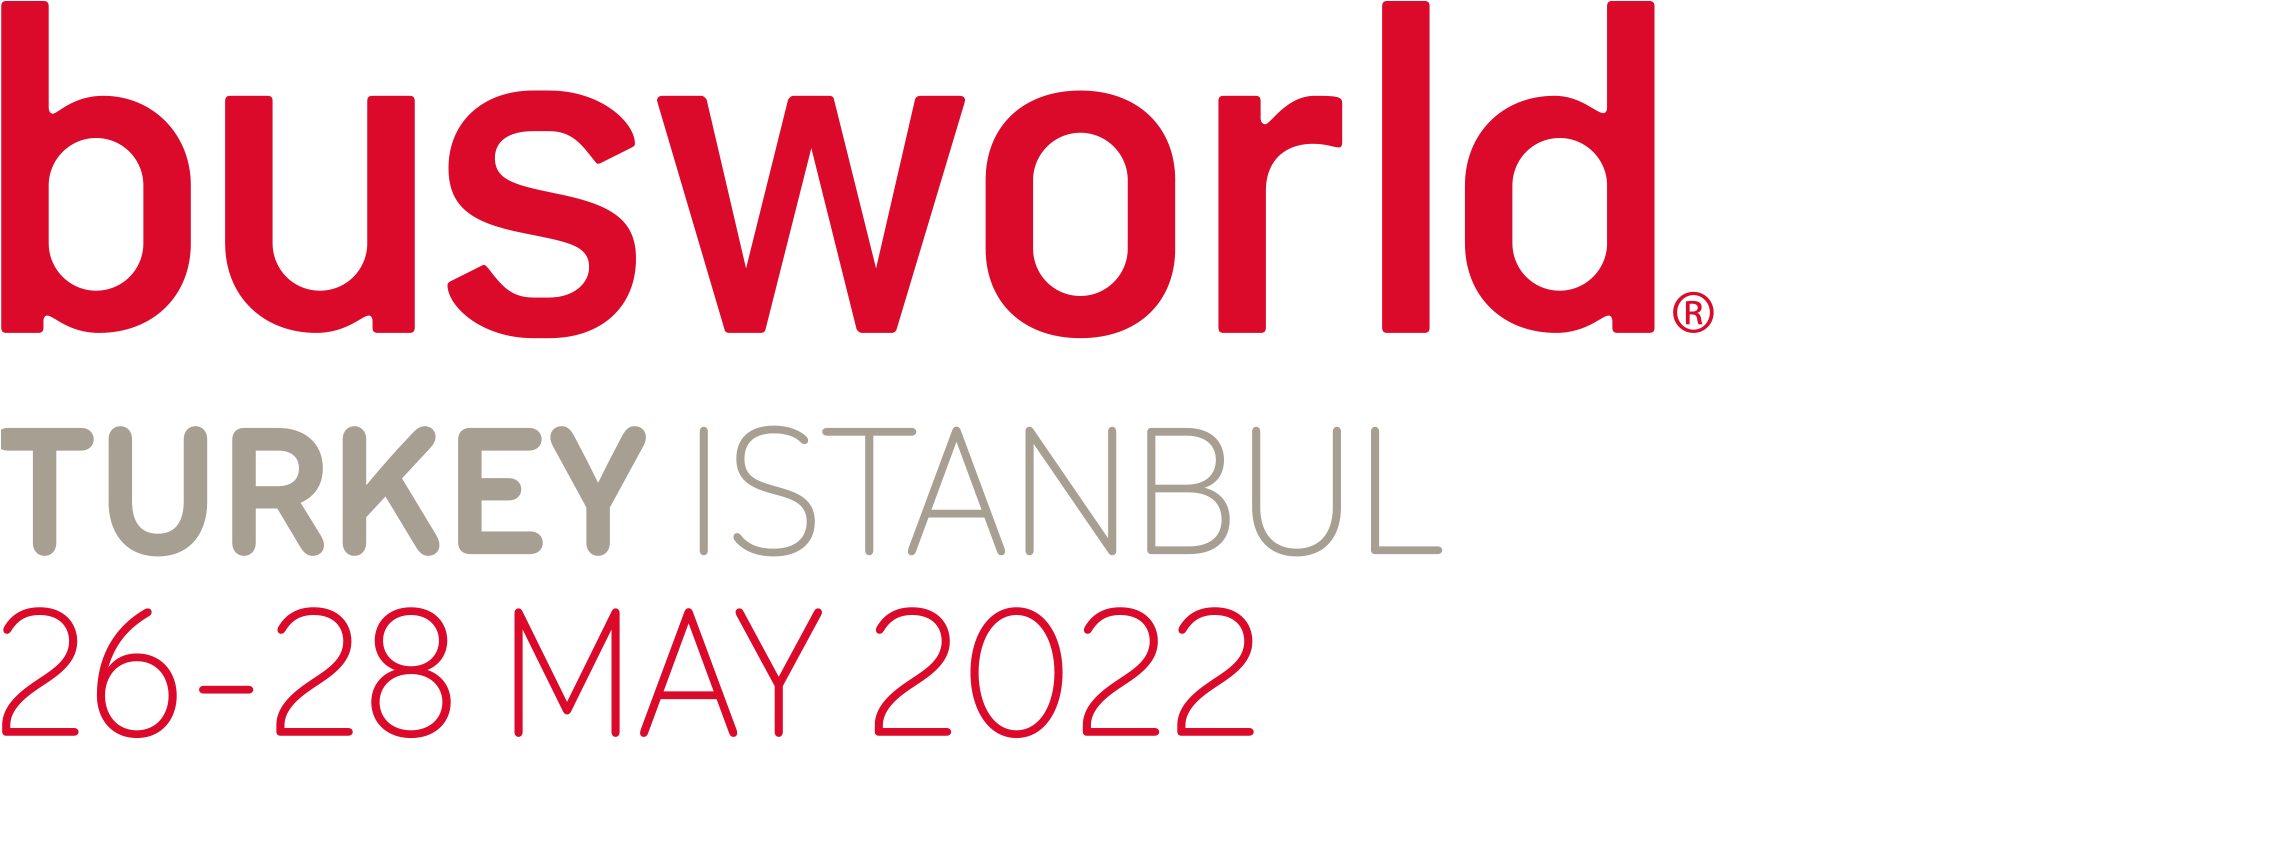 Busworld Turkey 2022 logo